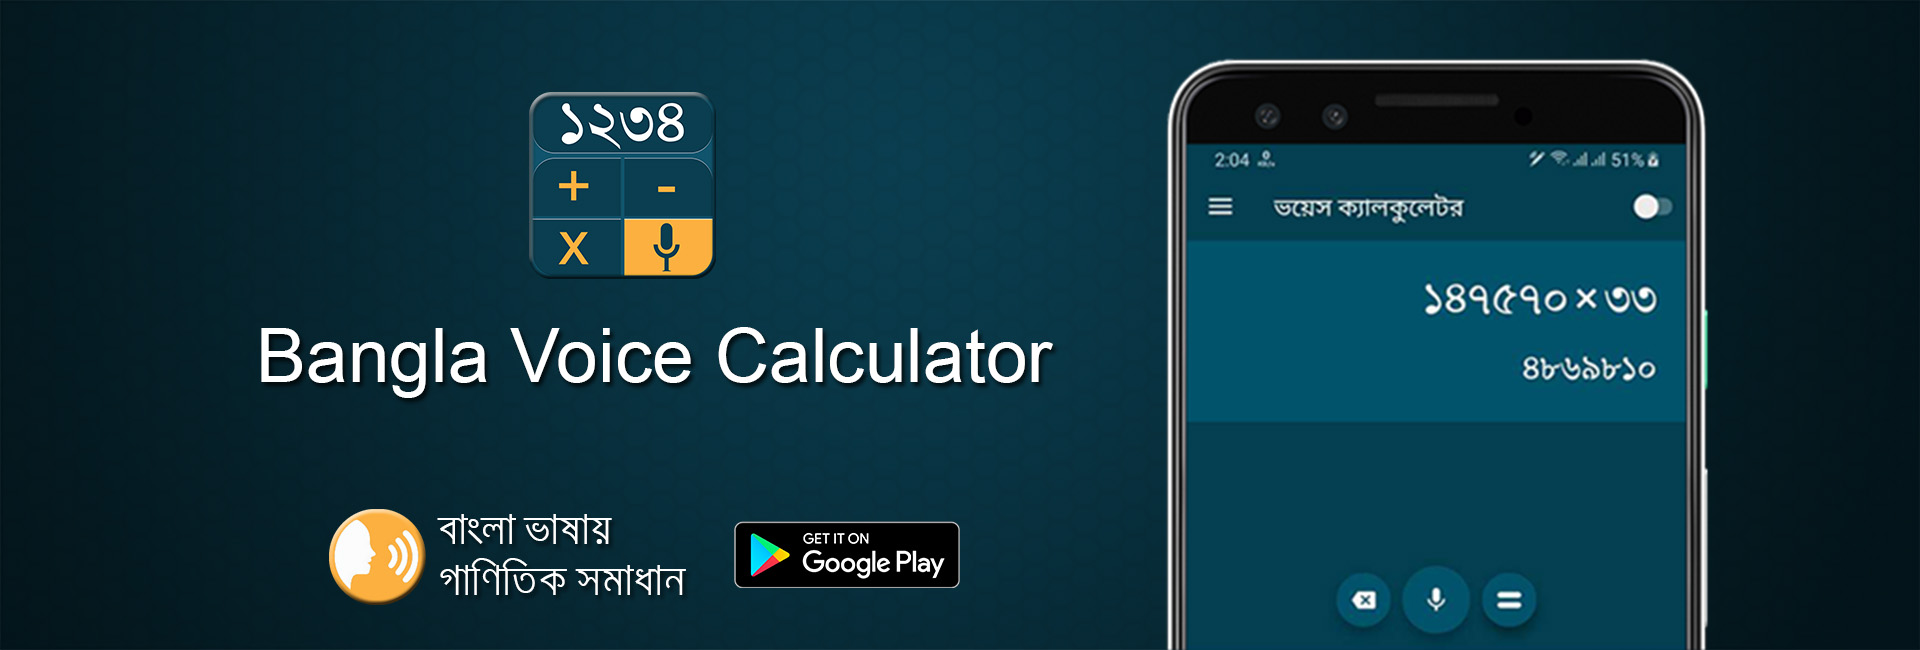 bangla voice calculator